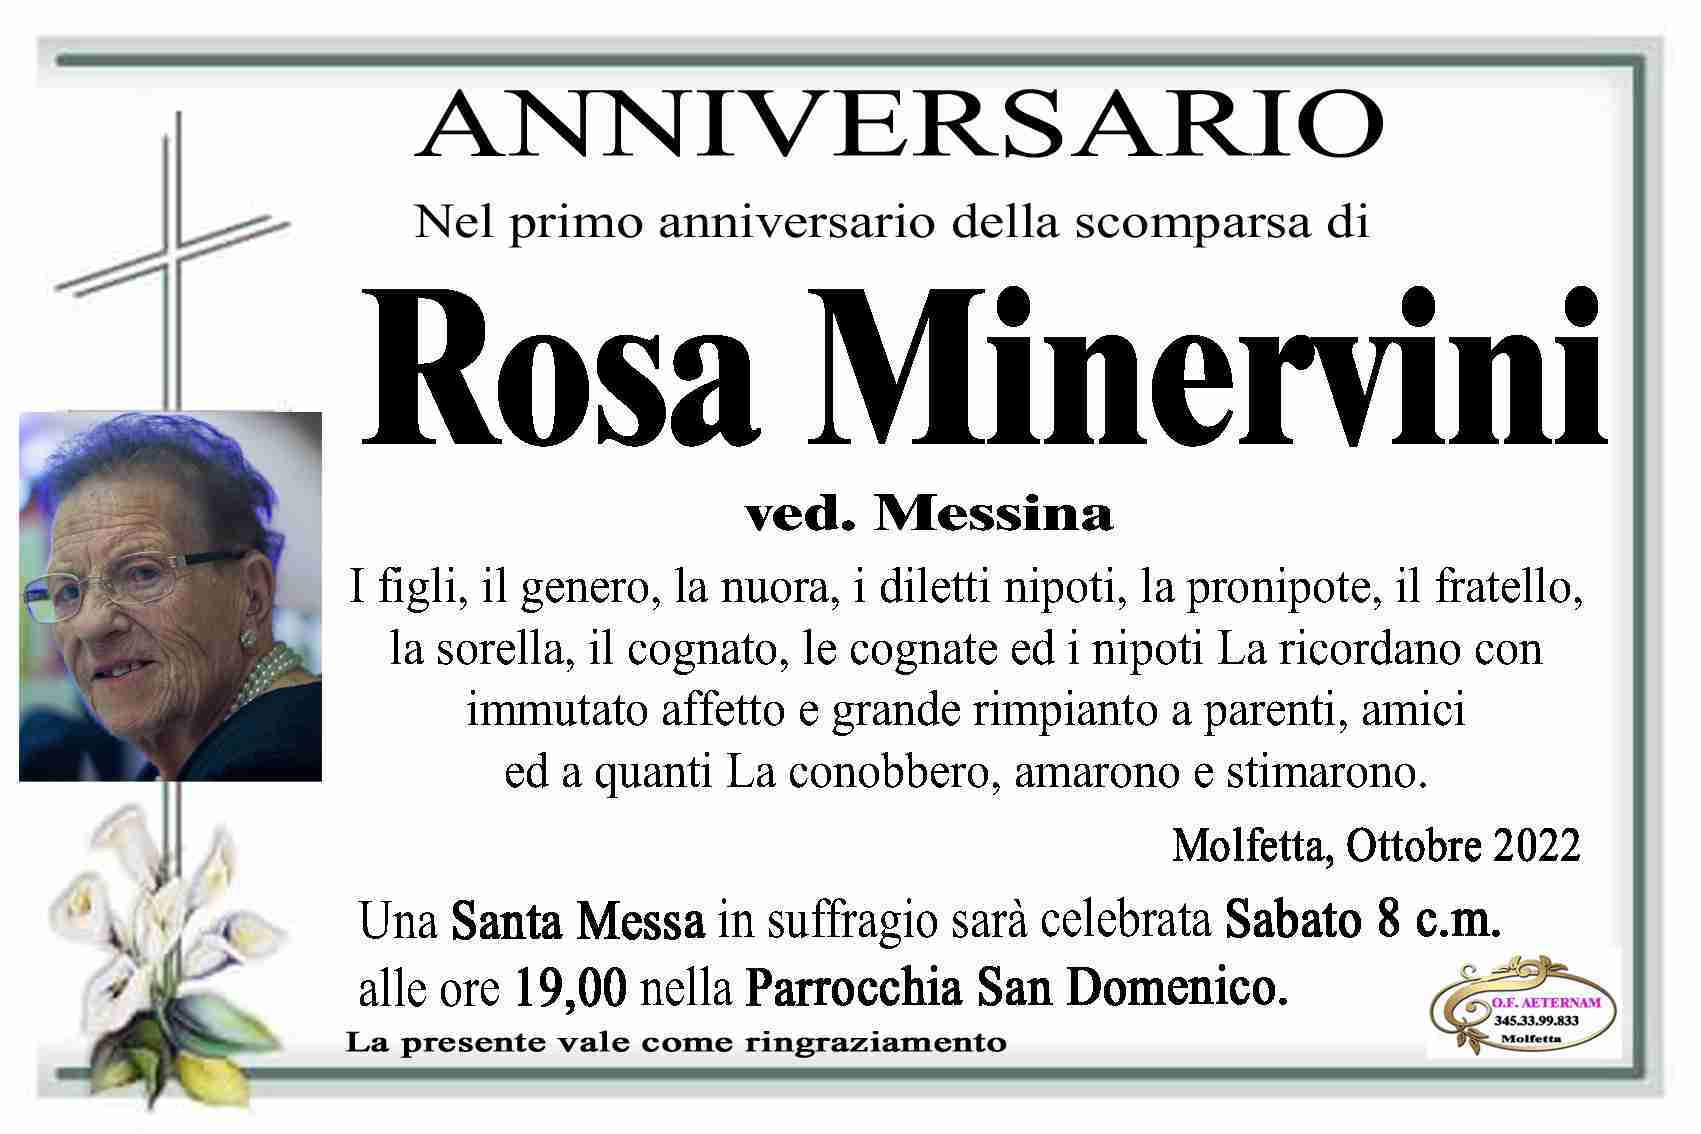 Rosa Minervini